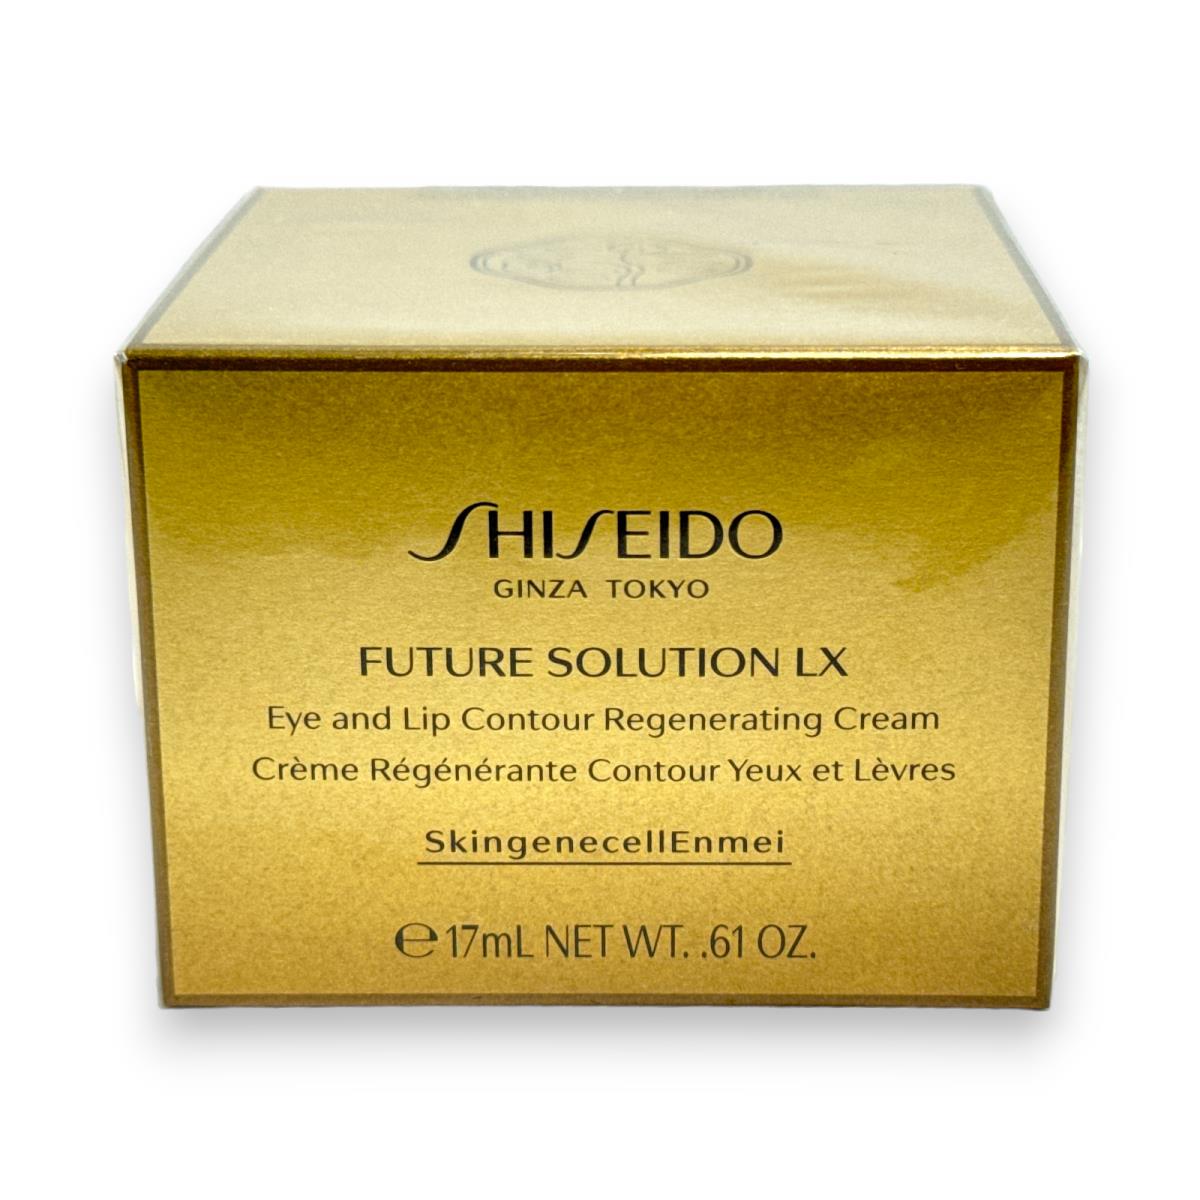 Shiseido Future Solution LX Eye and Lip Contour Regenerating Cream 17ml/.61oz